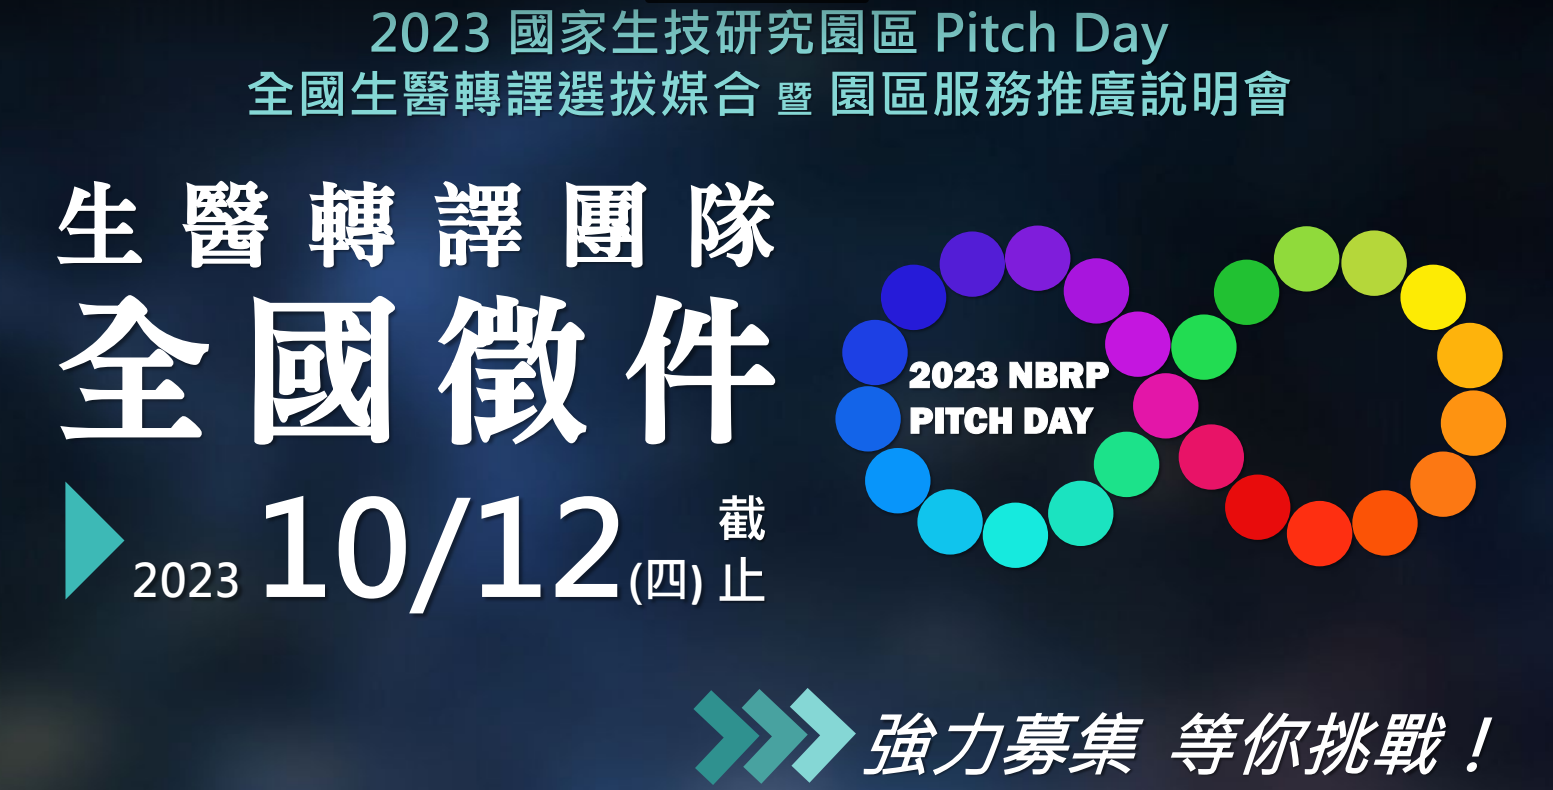 Featured image for “2023.12.14-15 中研院辦理「2023 NBRP Pitch Day全國生醫轉譯選拔媒合會暨園區服務推廣說明會」”